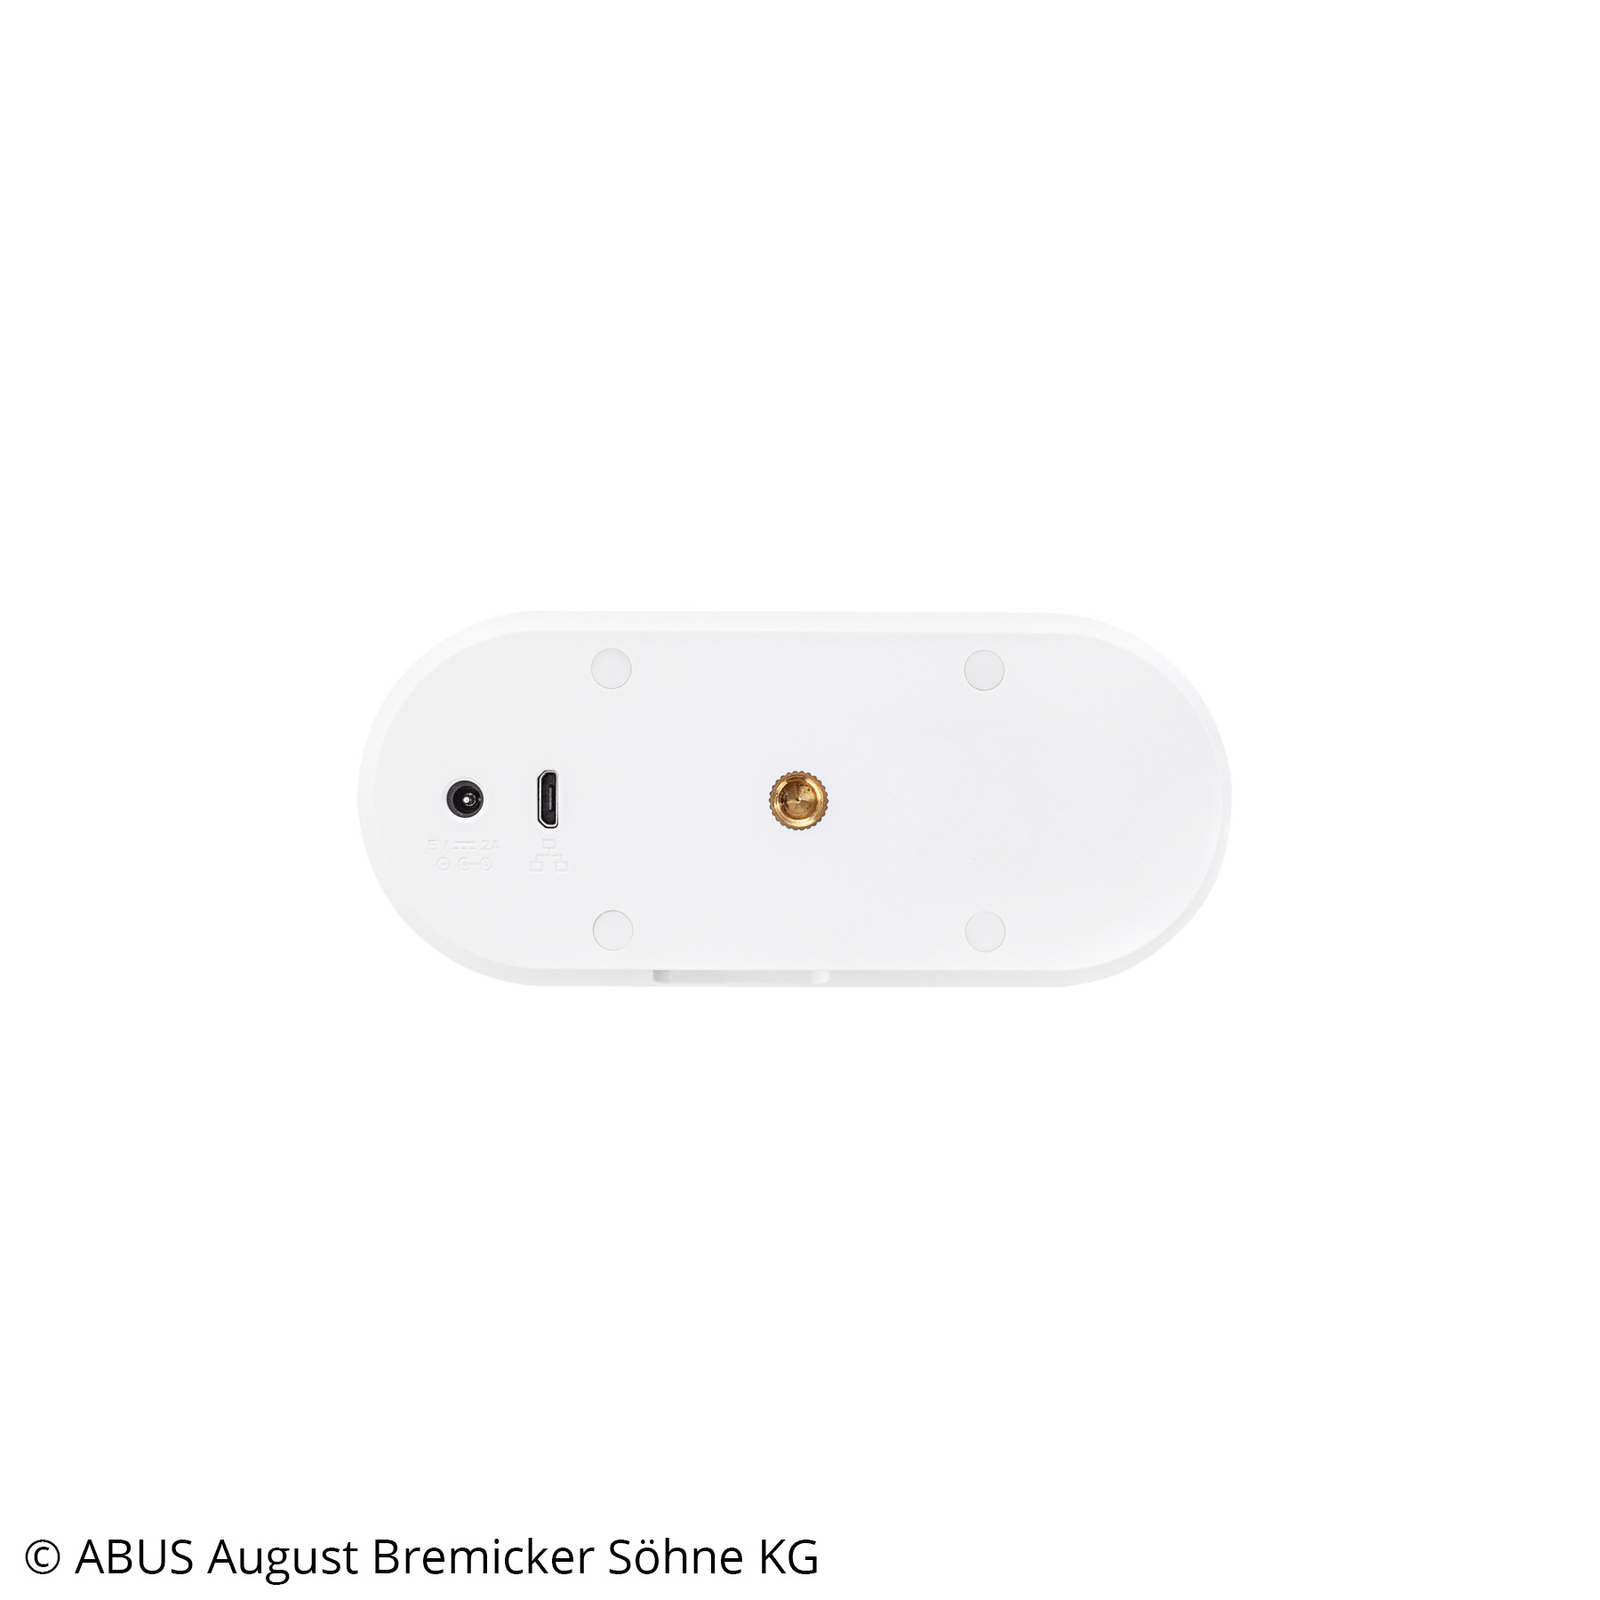 ABUS Privacy WiFi camera, full HD, 2-way audio